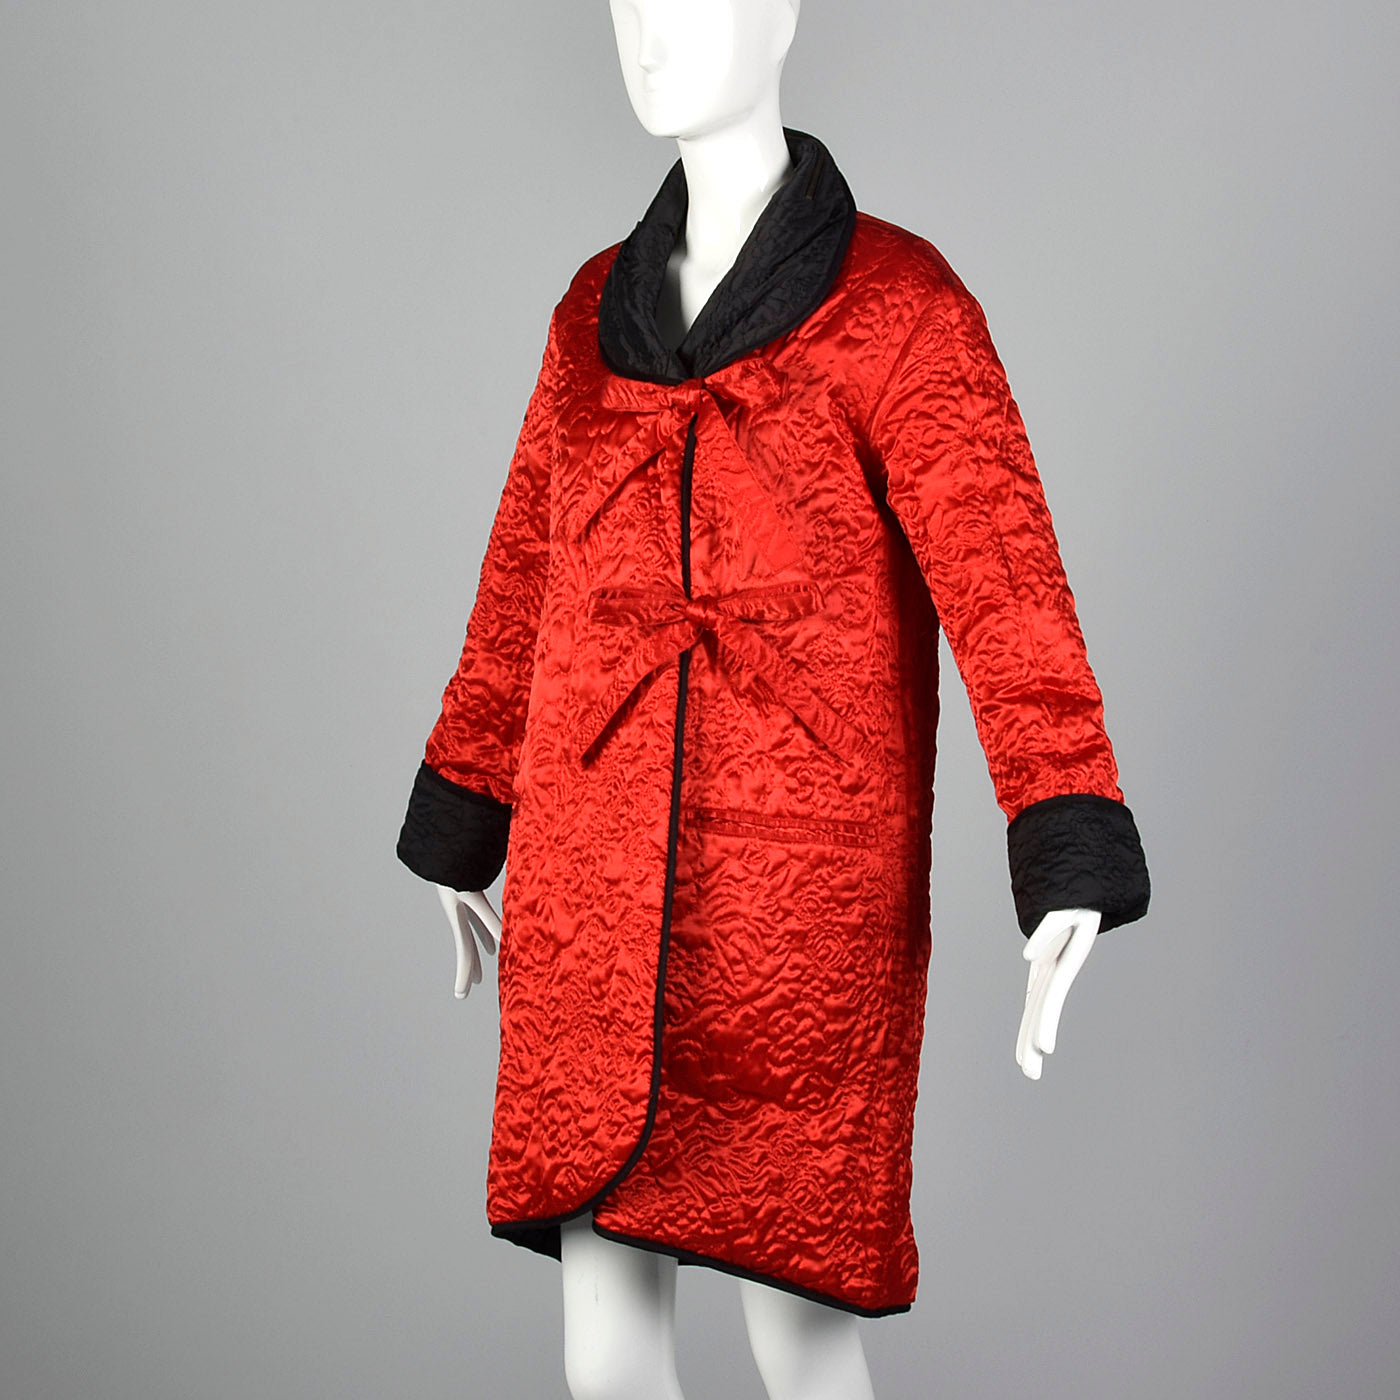 1980s Sonia Rykiel Reversible Quilted Coat